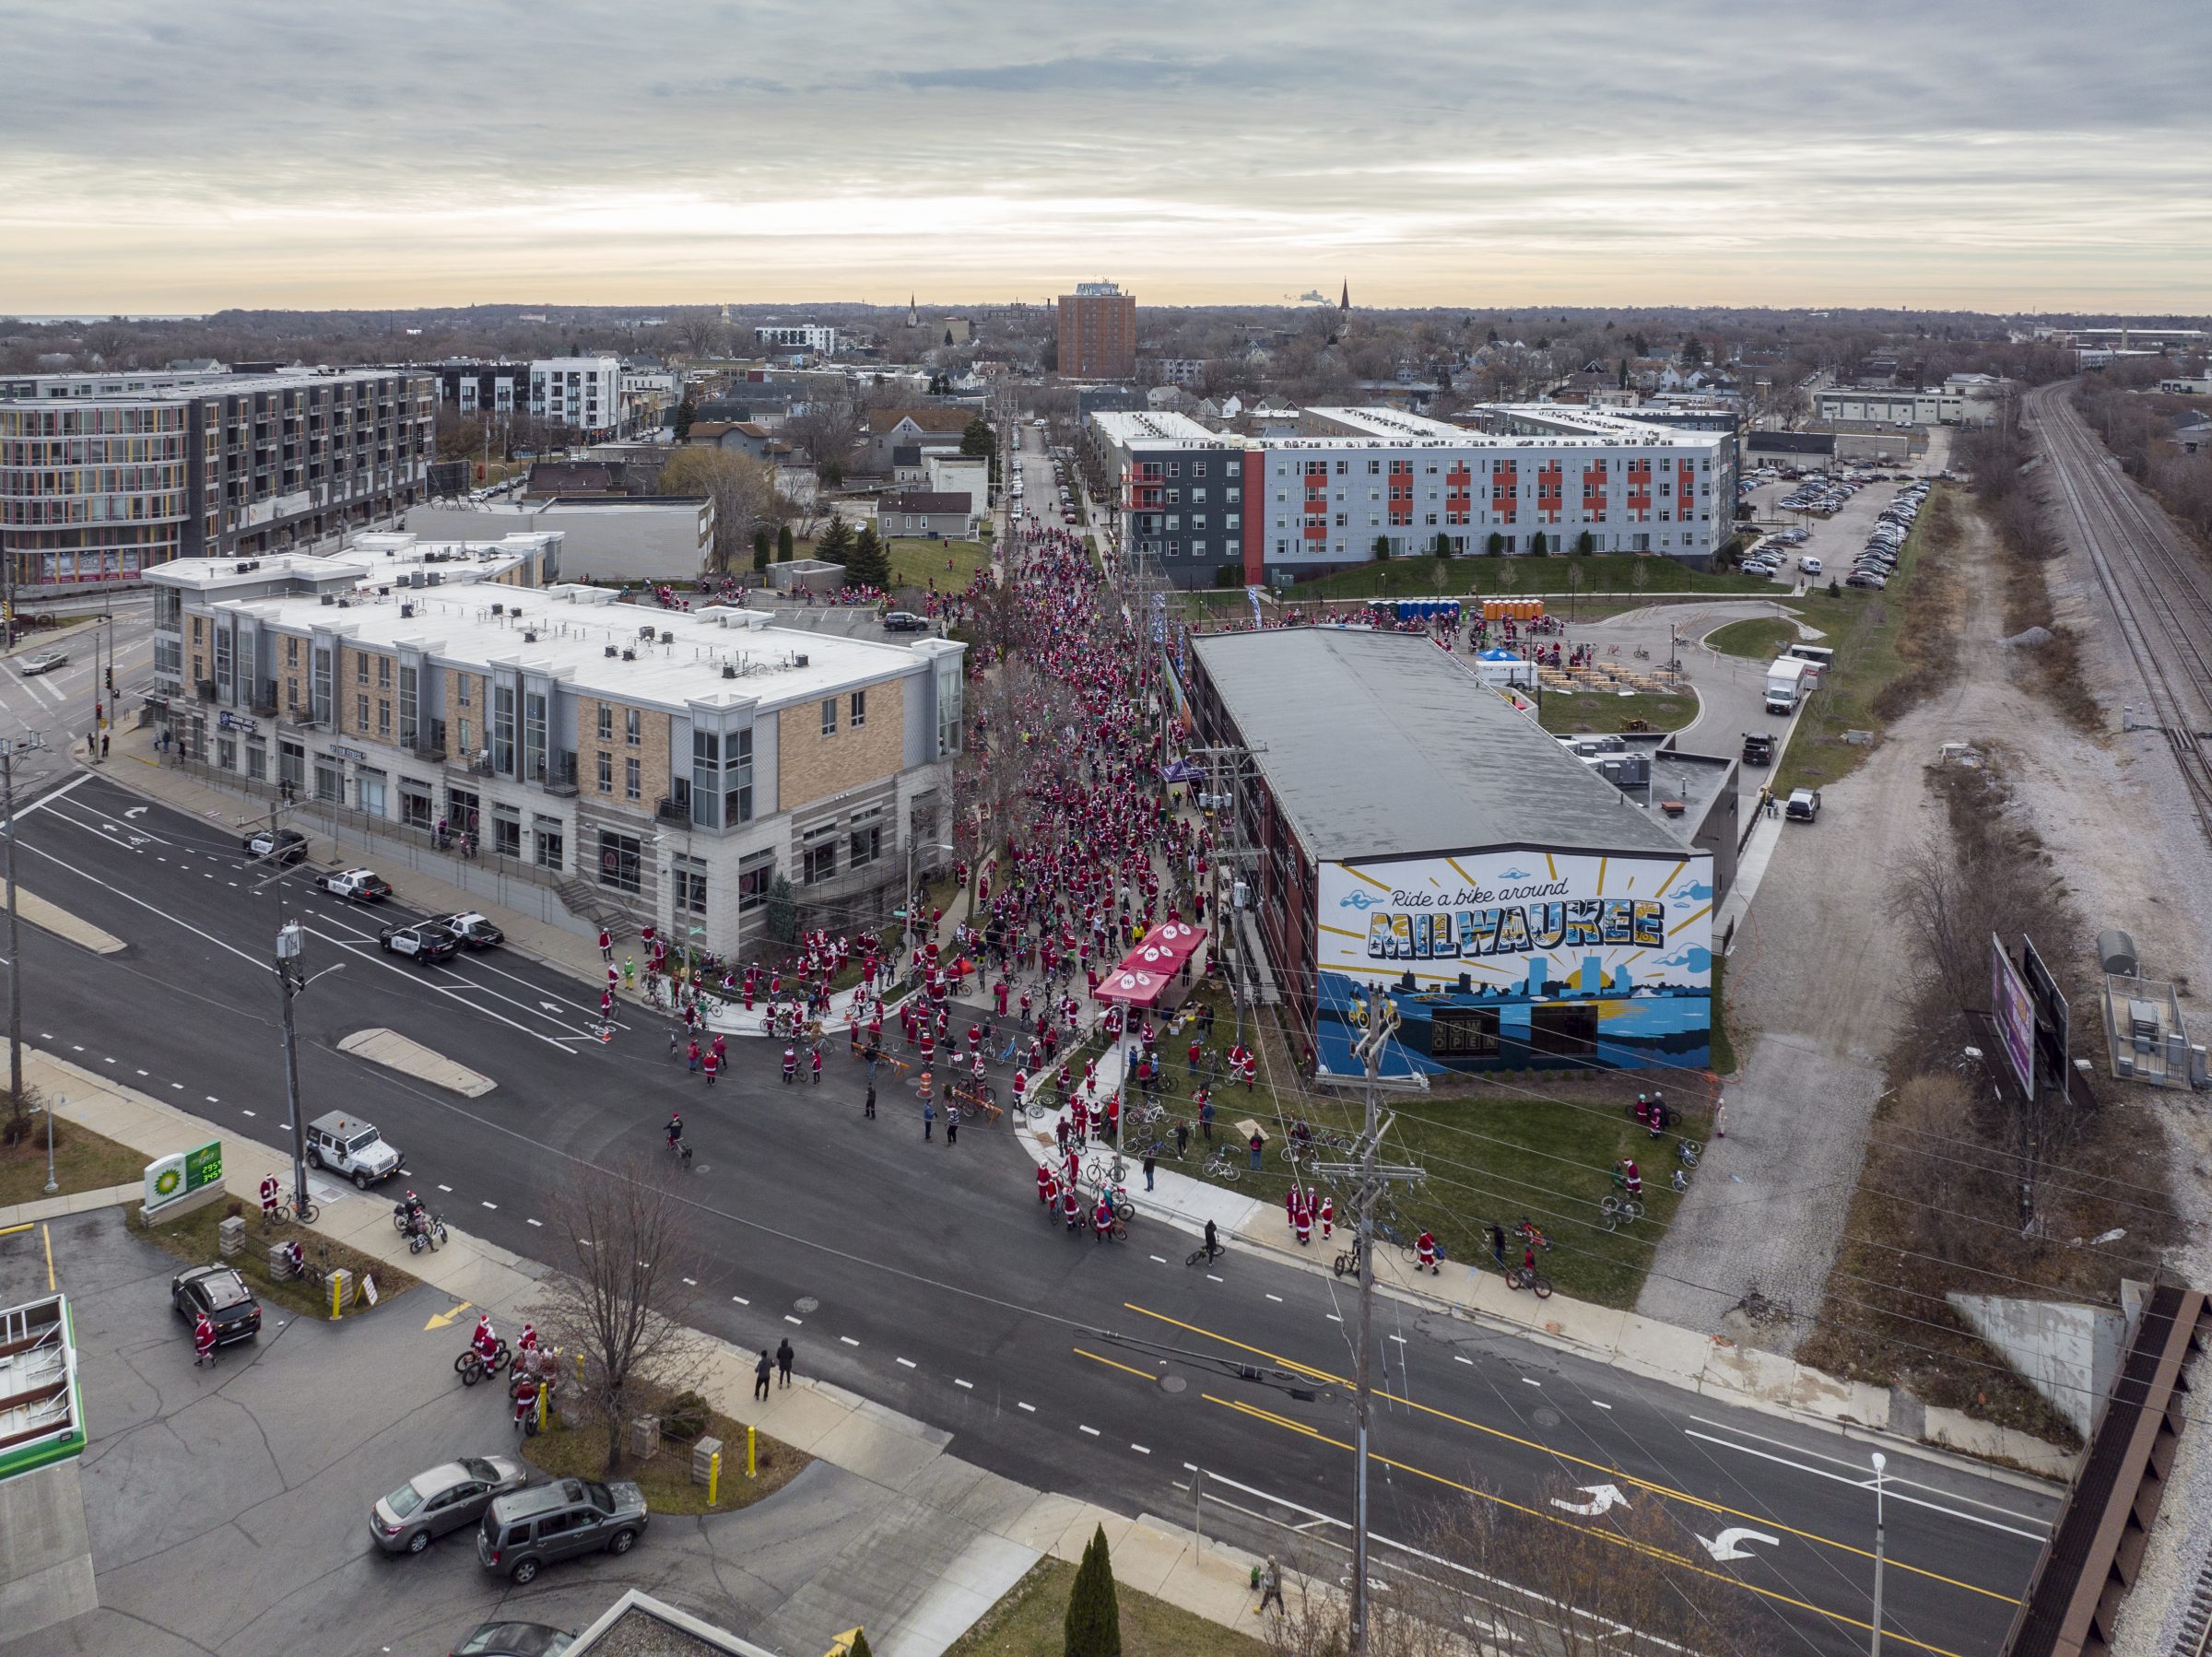 overhead view of 1000 people in santa costumes on bikes